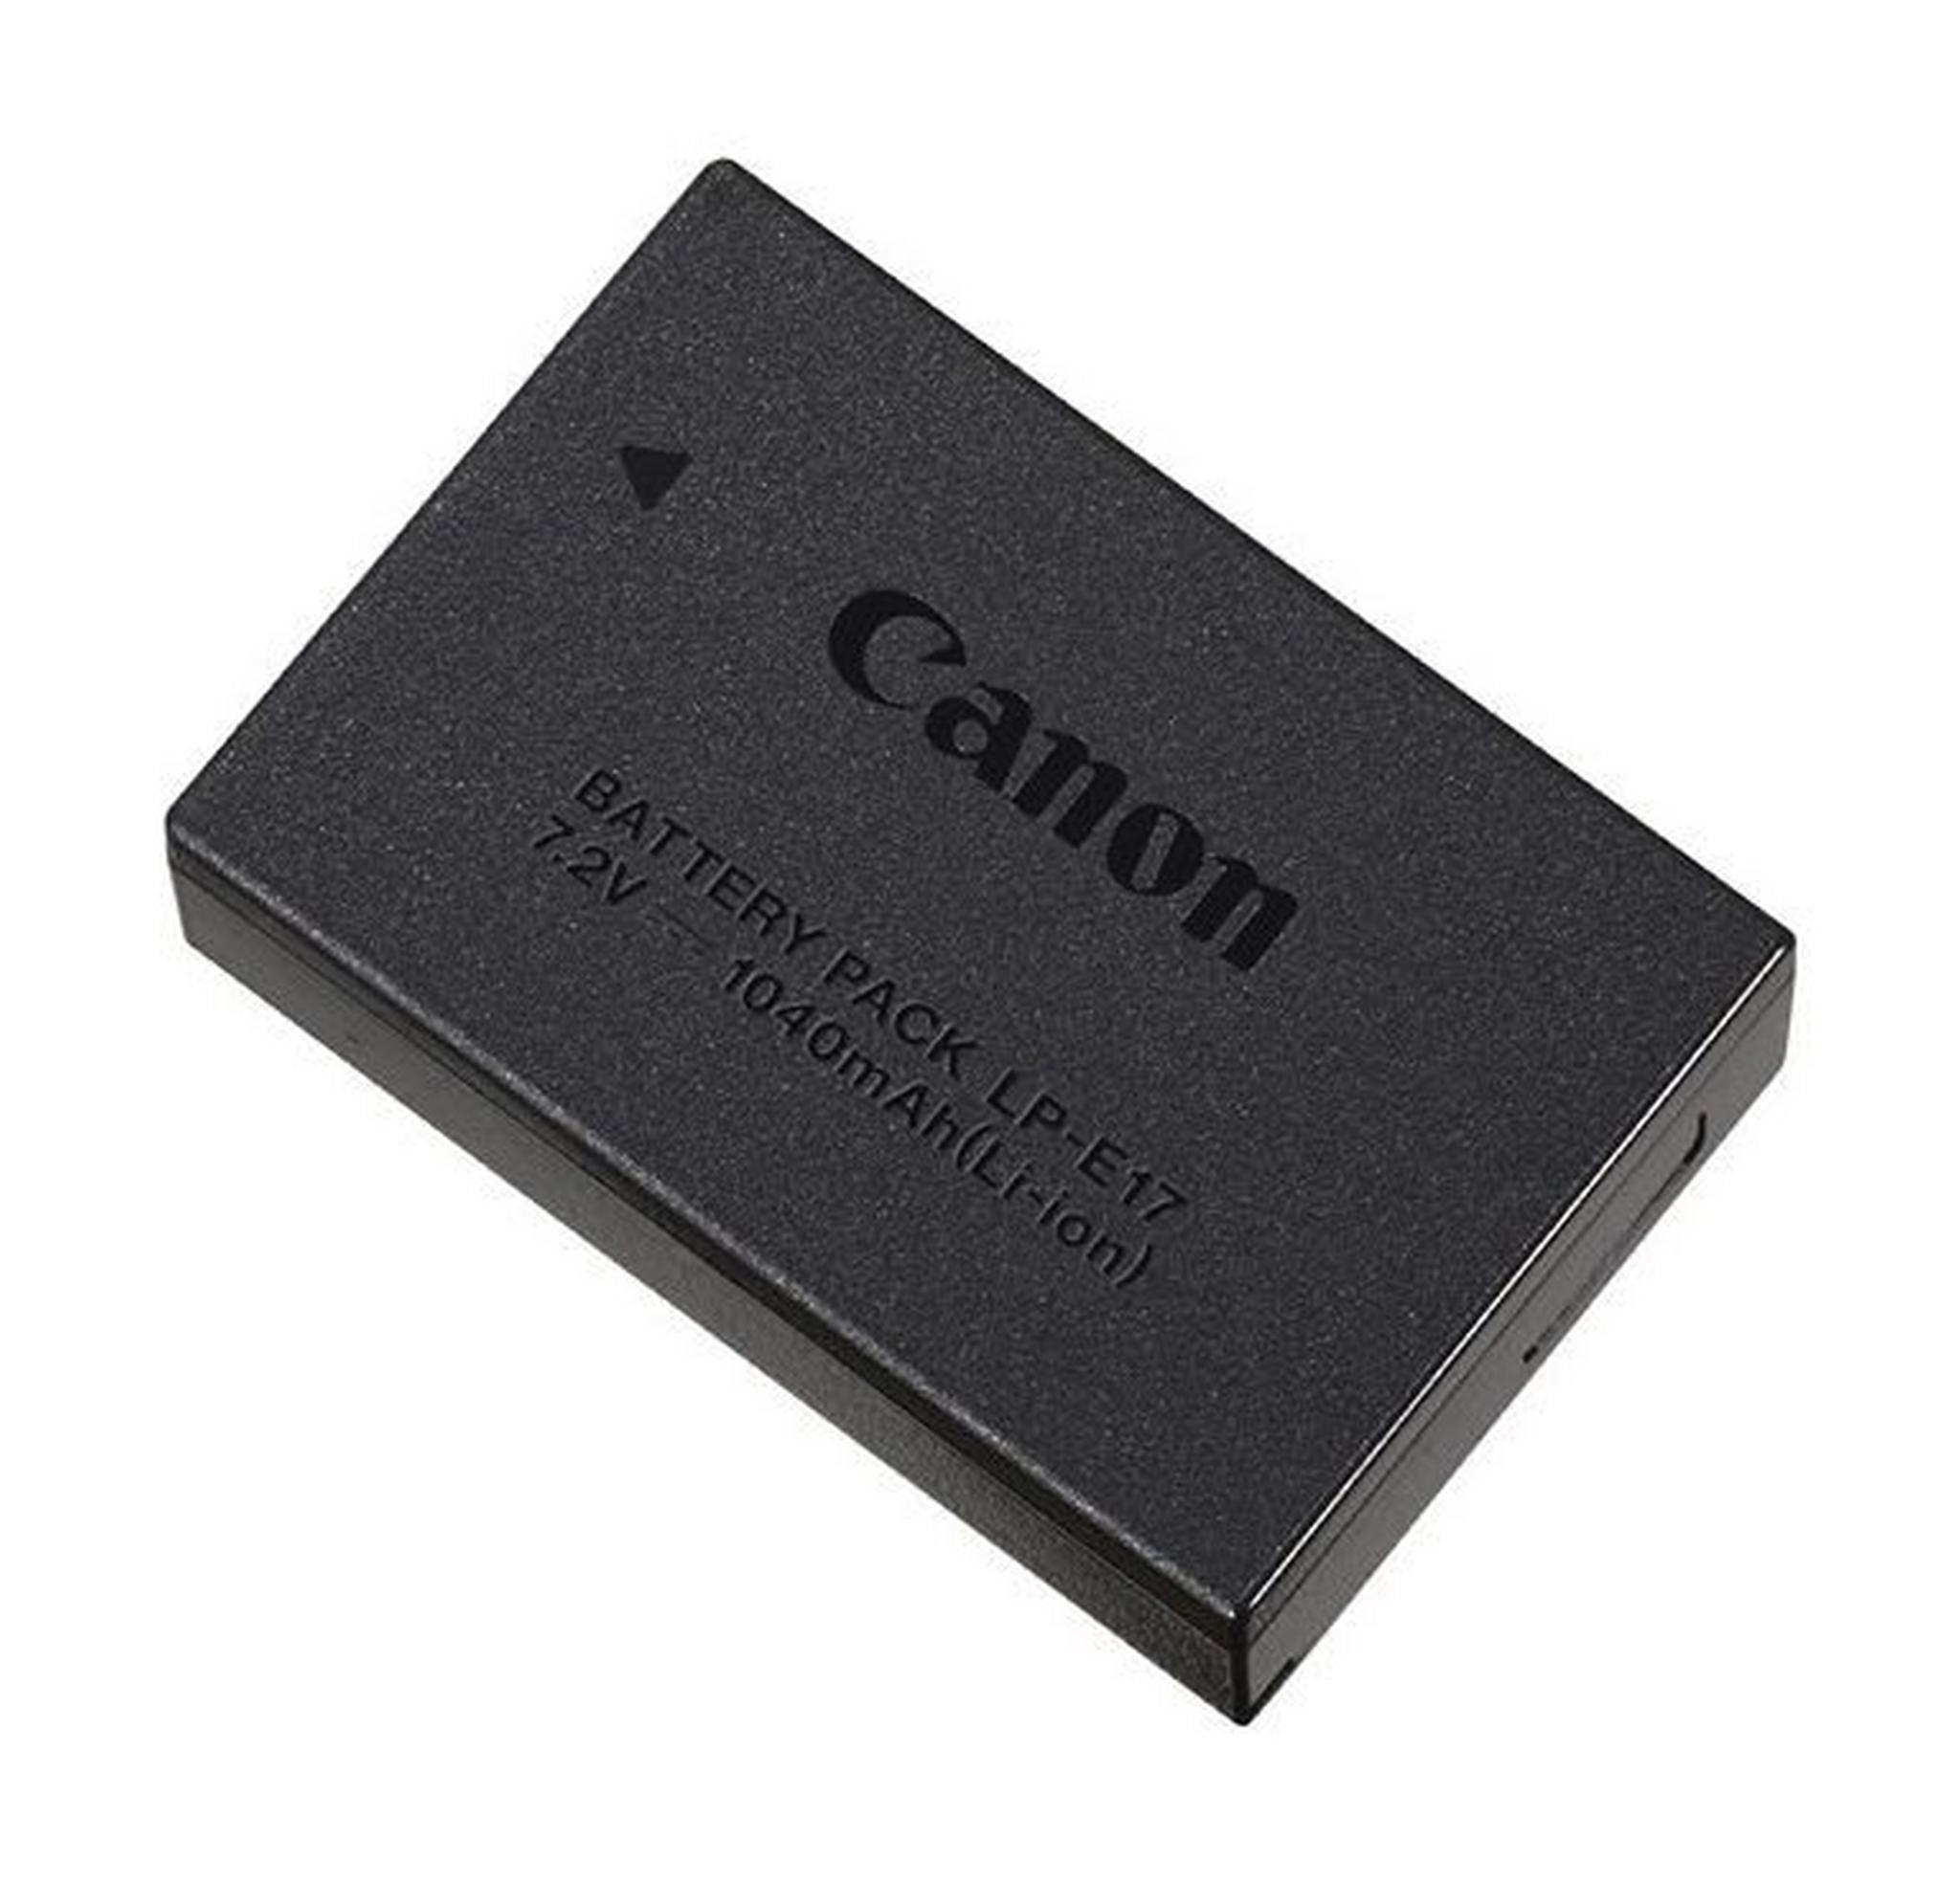 Canon Li-ion Replacement Battery (LP-E17)